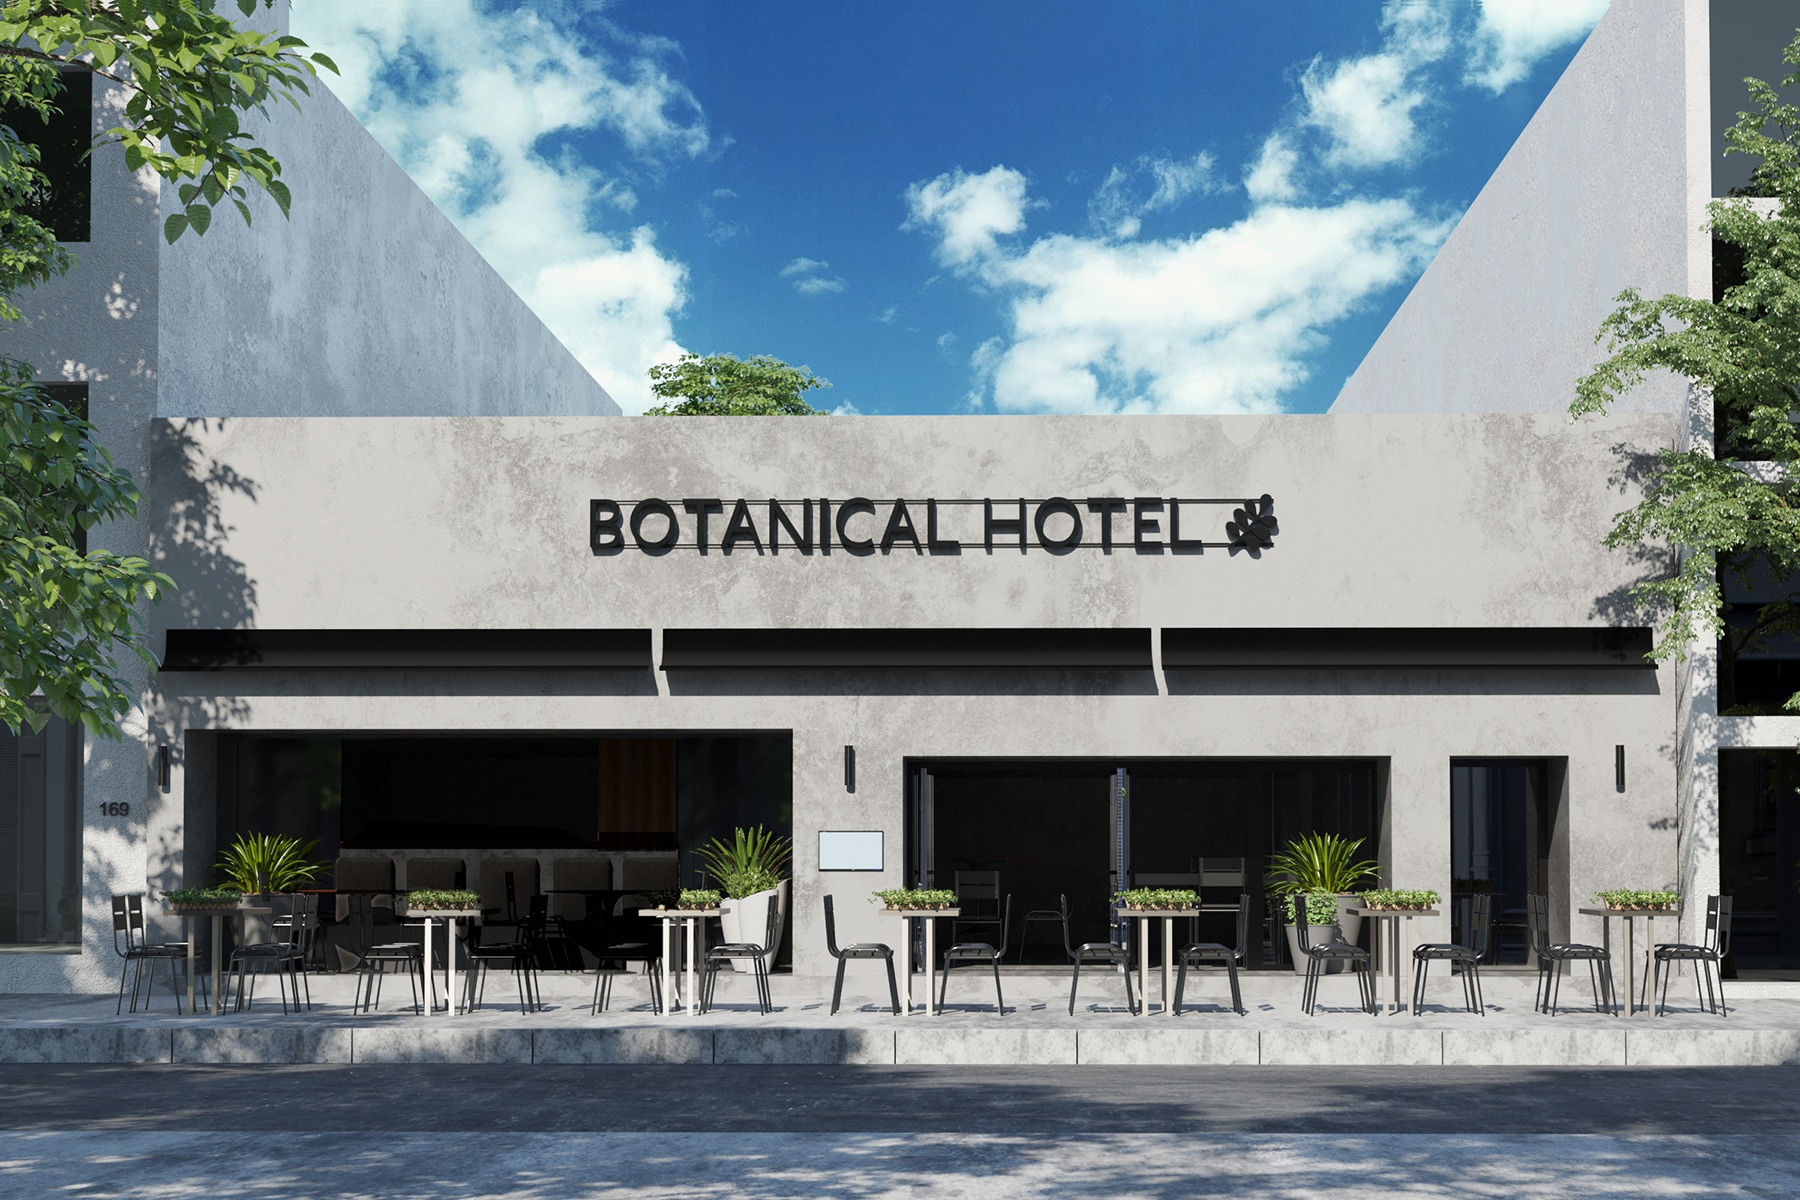 Botanical Hotel, South Yarra’s Local